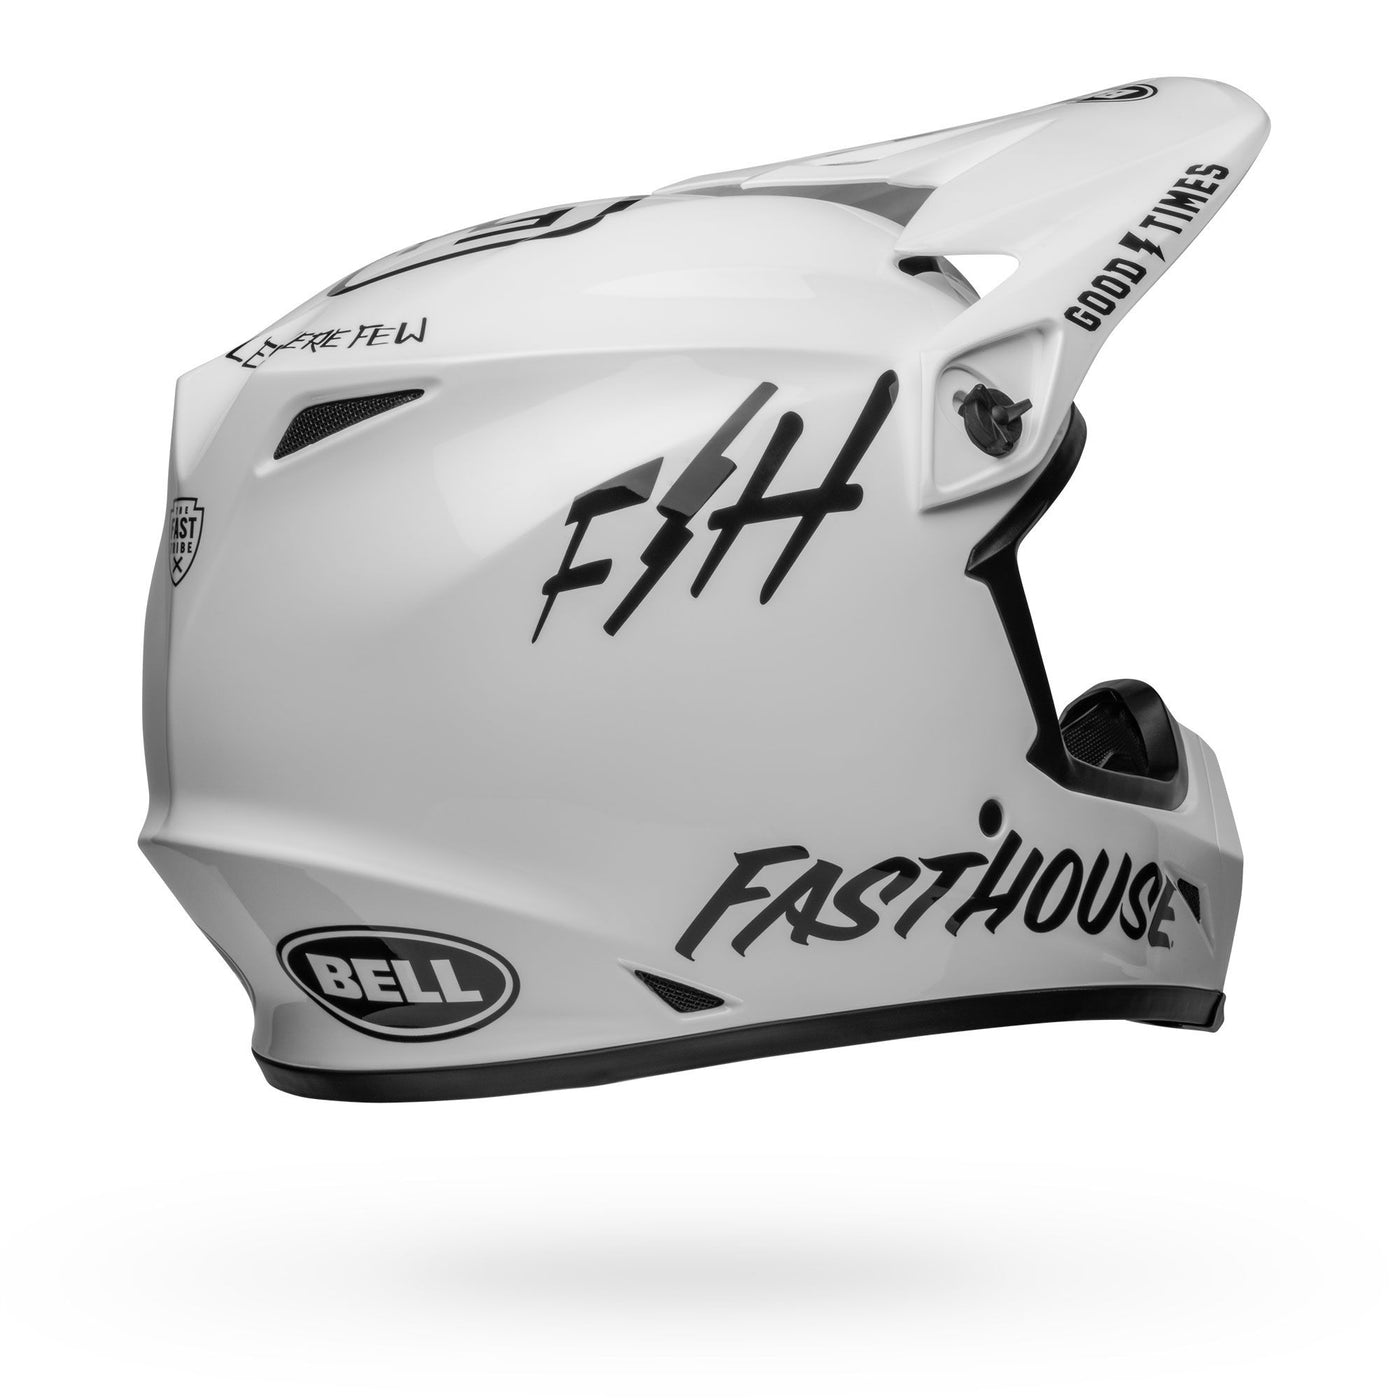 bell mx 9 mips dirt motorcycle helmet fasthouse gloss white black back right